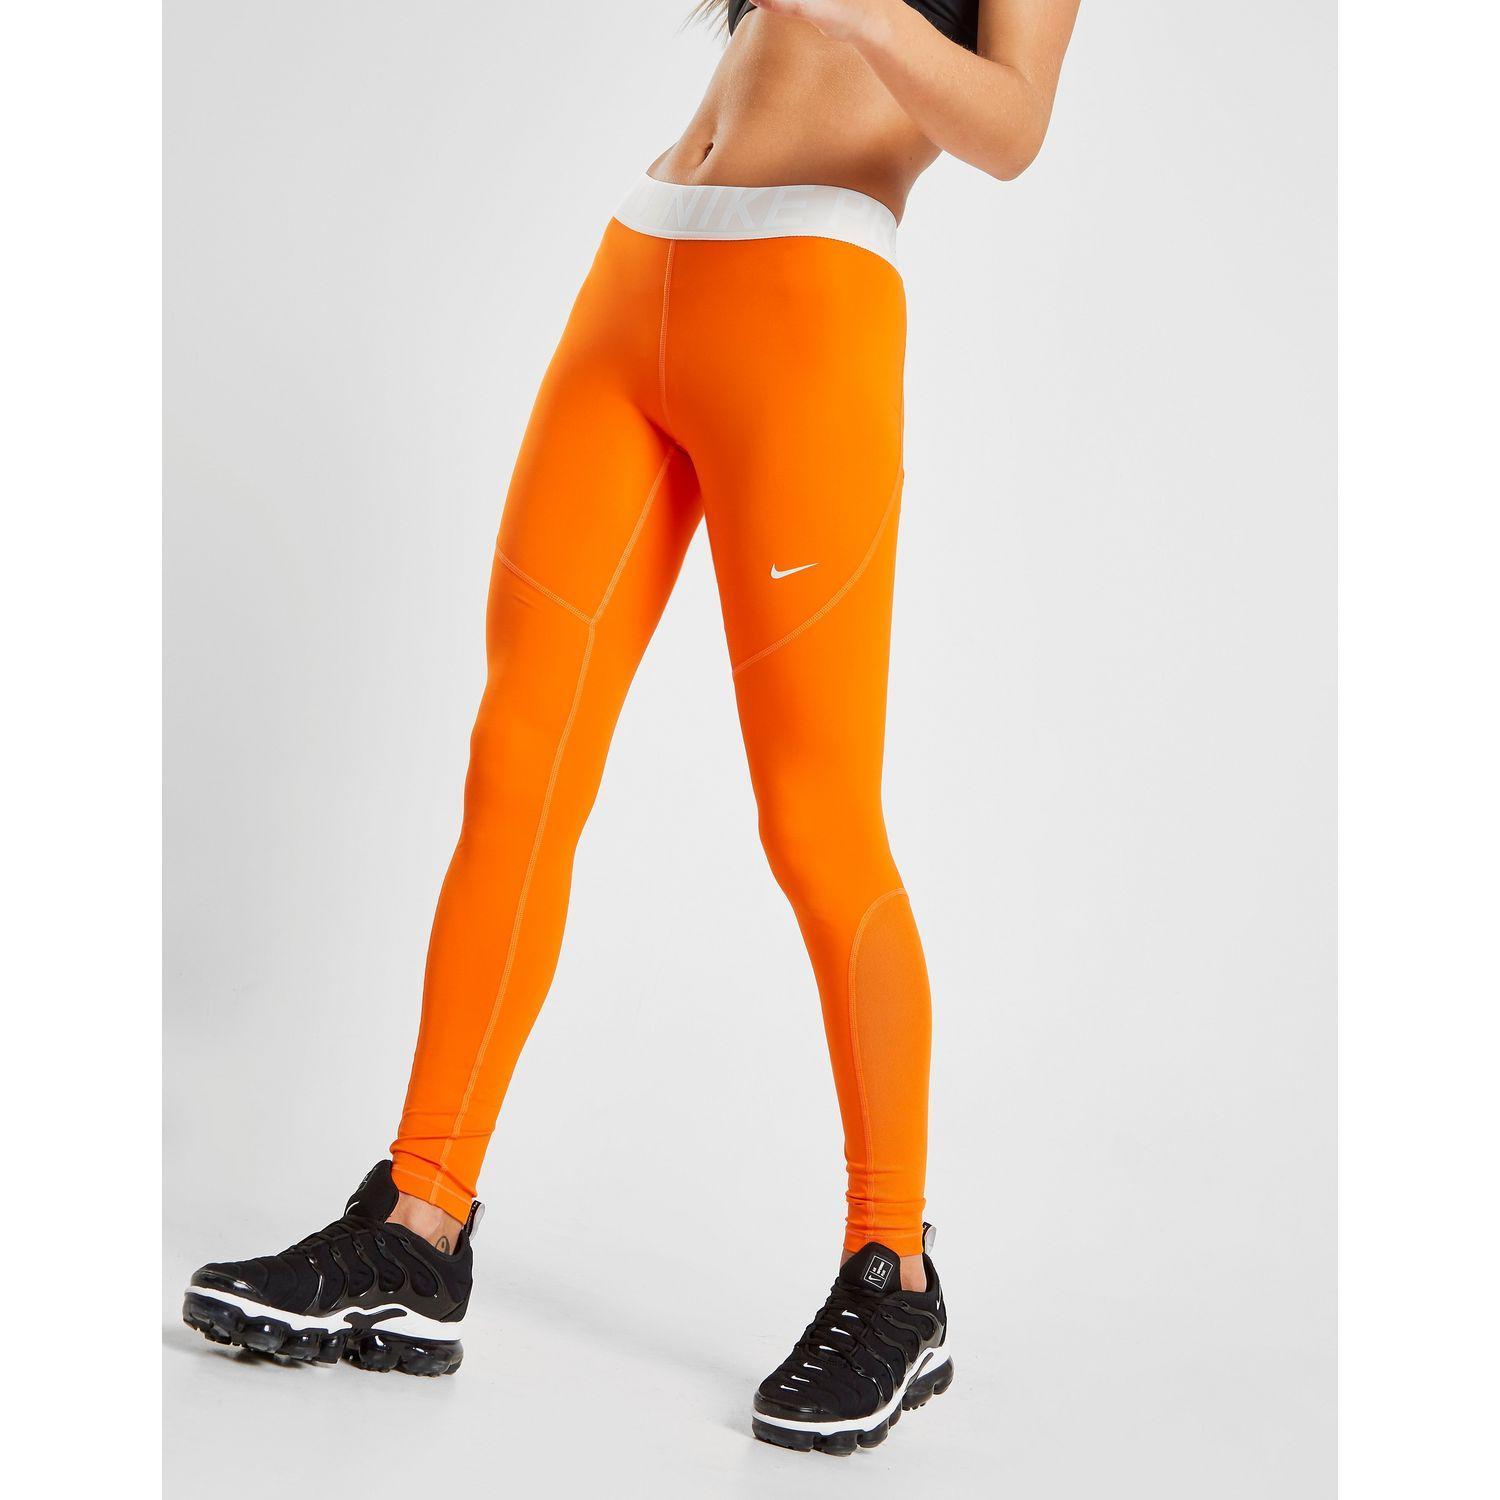 orange nike leggings